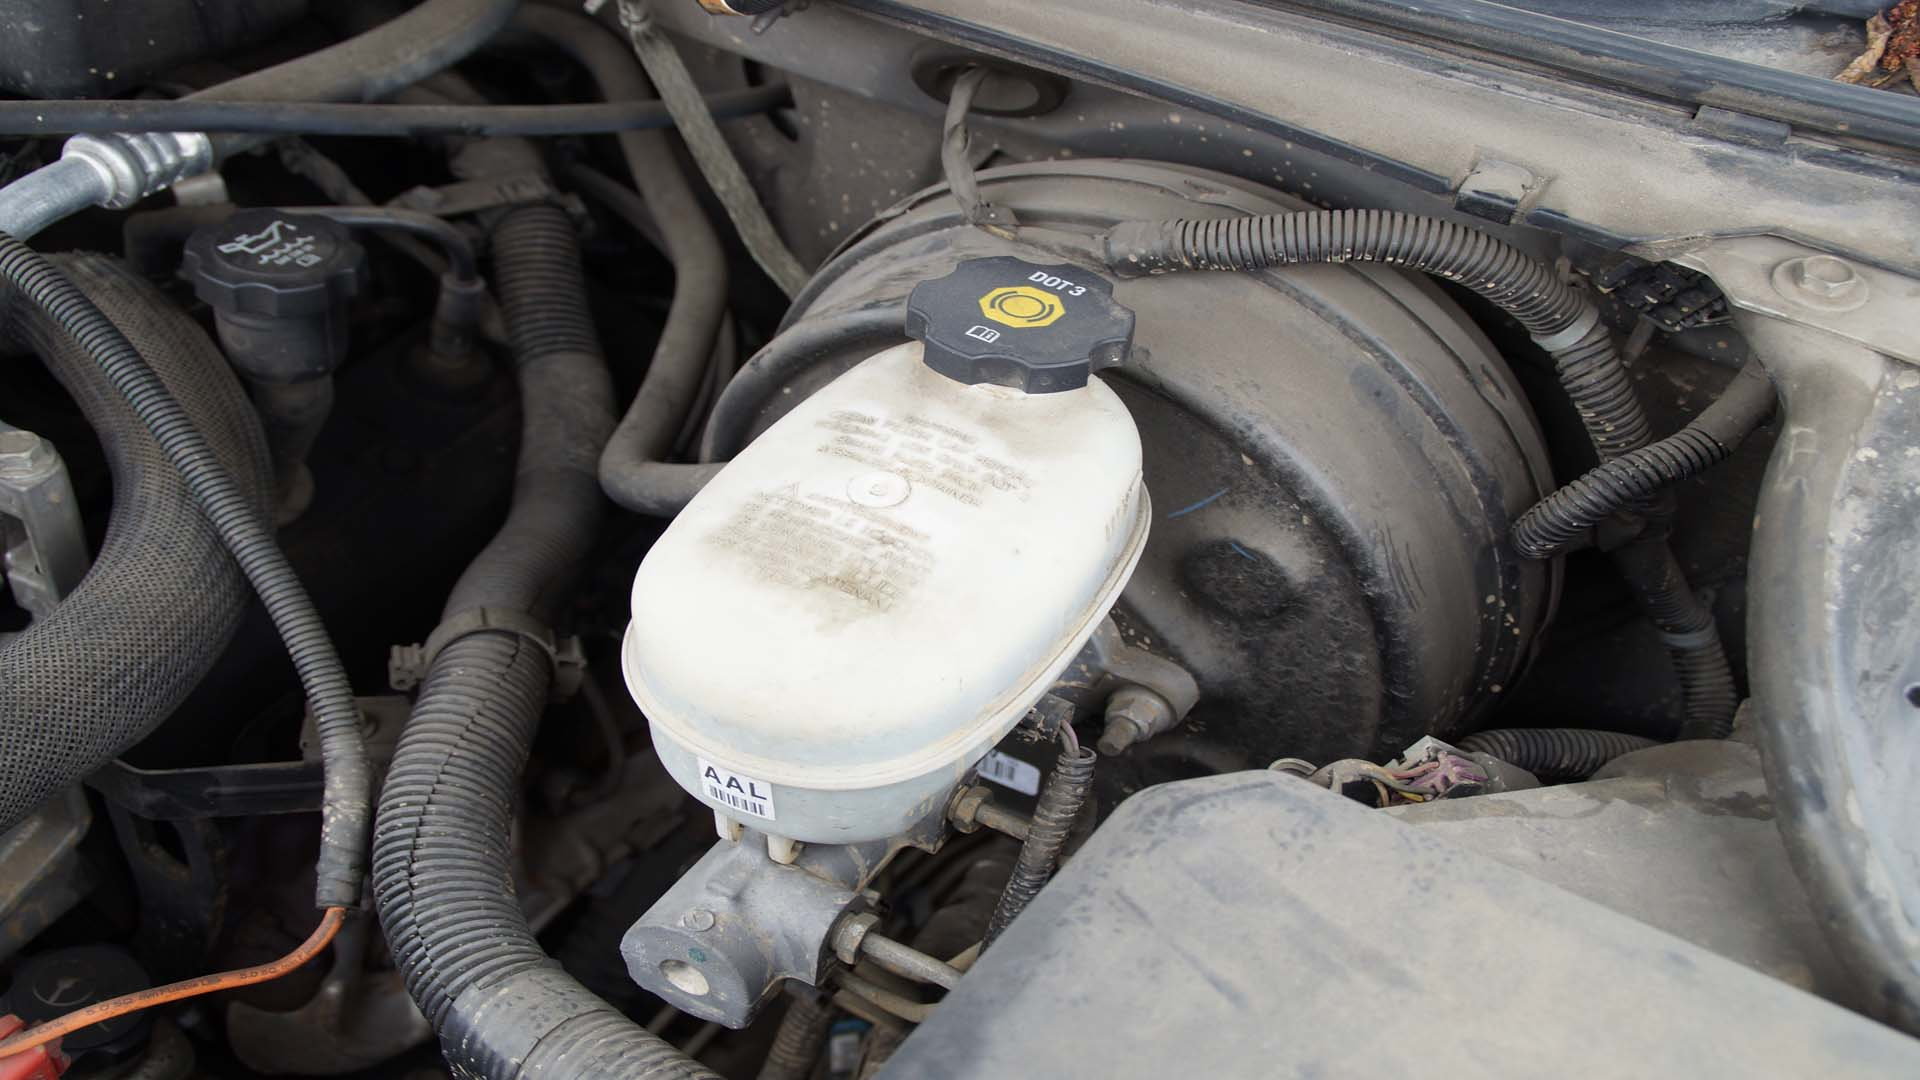 Chevrolet Silverado 1999-2006: How to Replace Brake Fluid | Chevroletforum